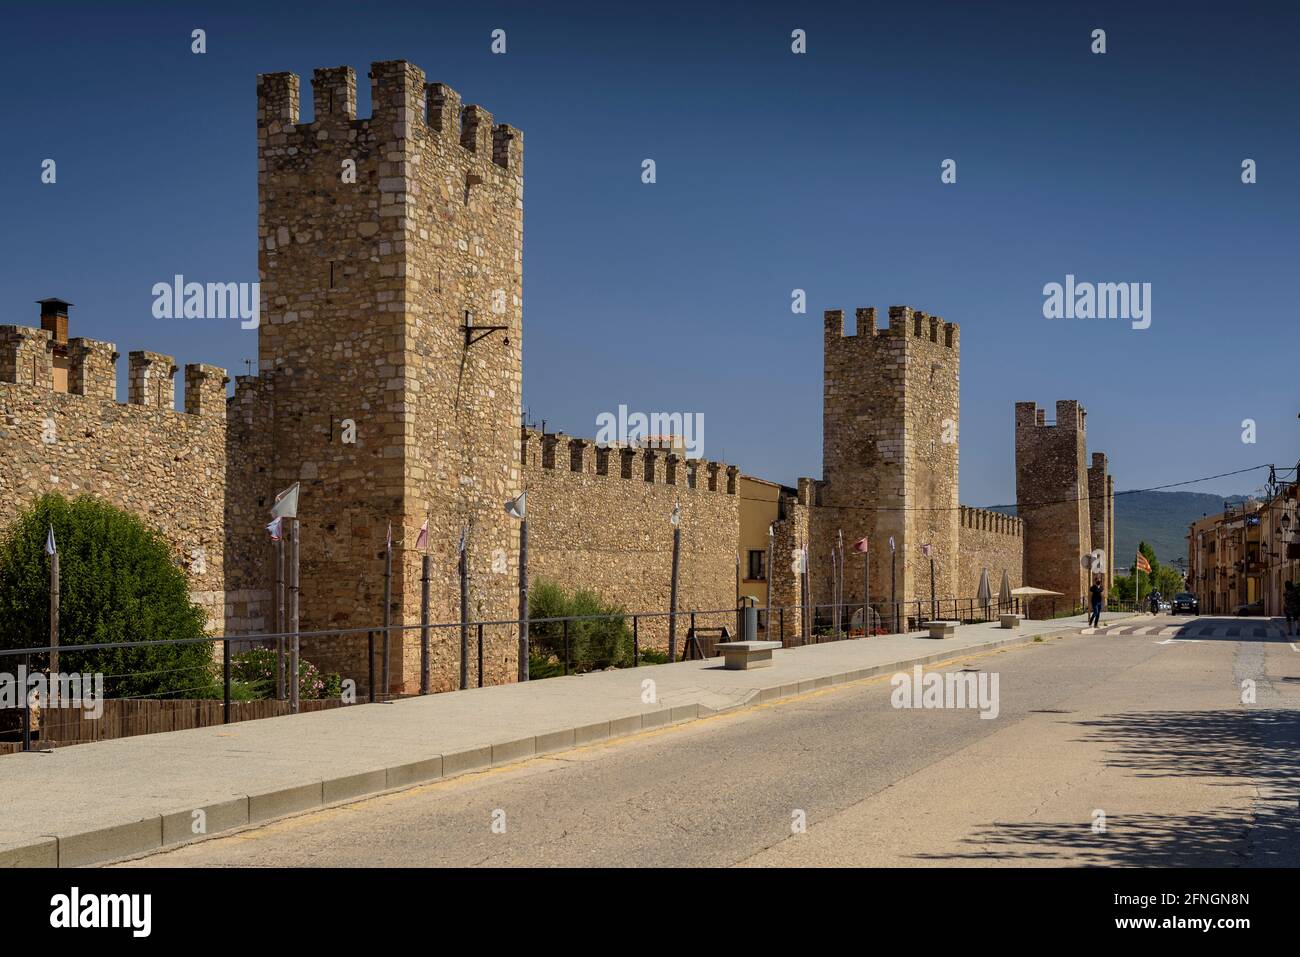 Montblanc medieval wall (Conca de Barberà, Tarragona, Catalonia, Spain) ESP: Muralla medieval de Montblanc (Conca de Barberà, Tarragona, Cataluña) Stock Photo